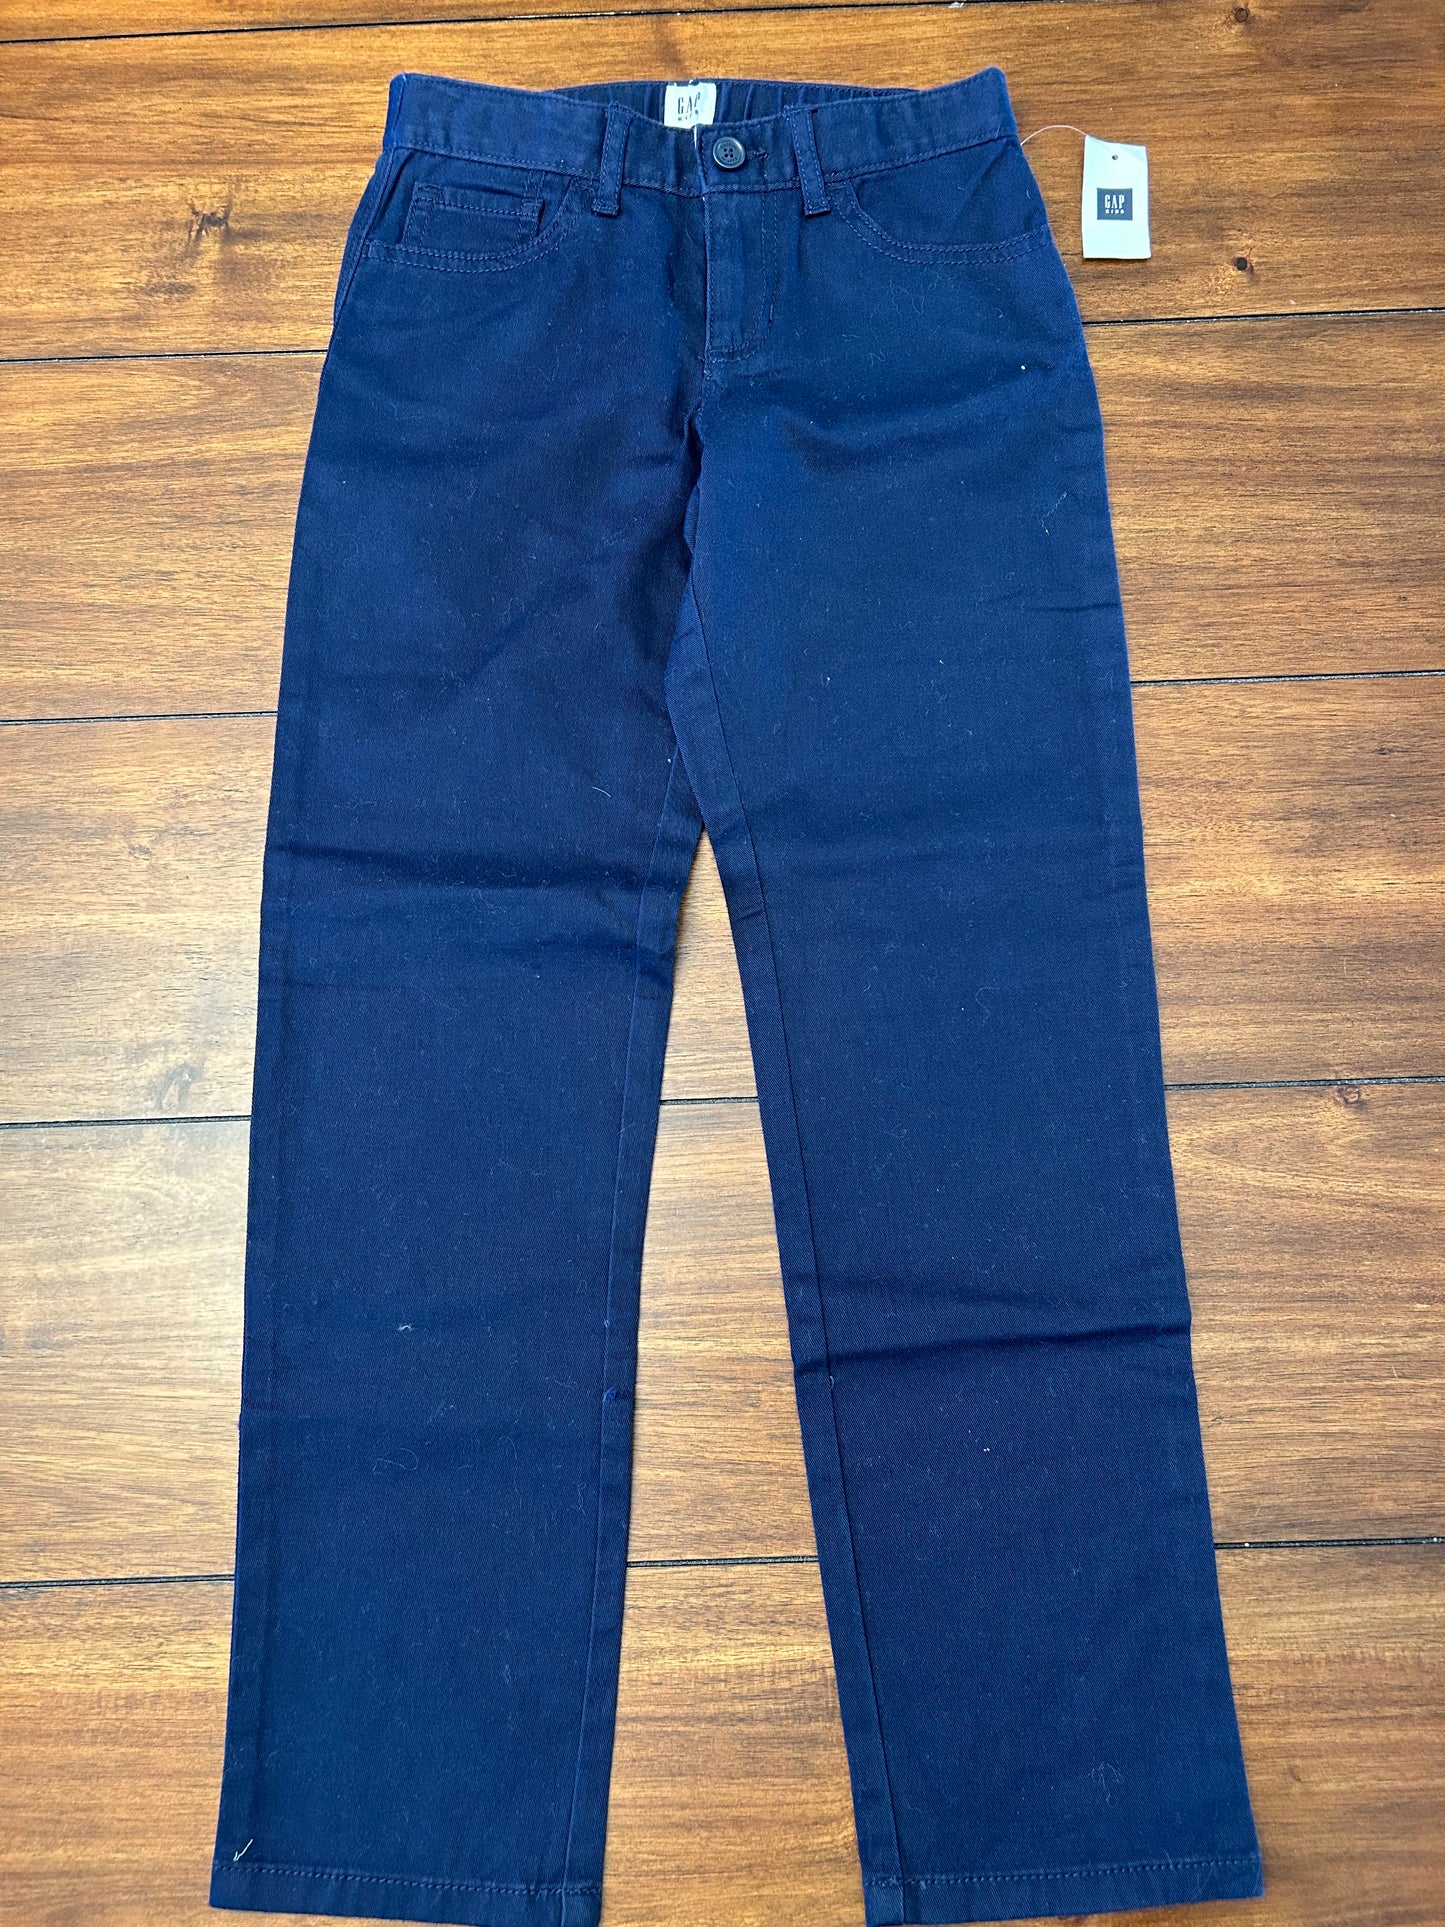 Gap	Boys Navy Chino Pants Size 8 NWT PPU 45040